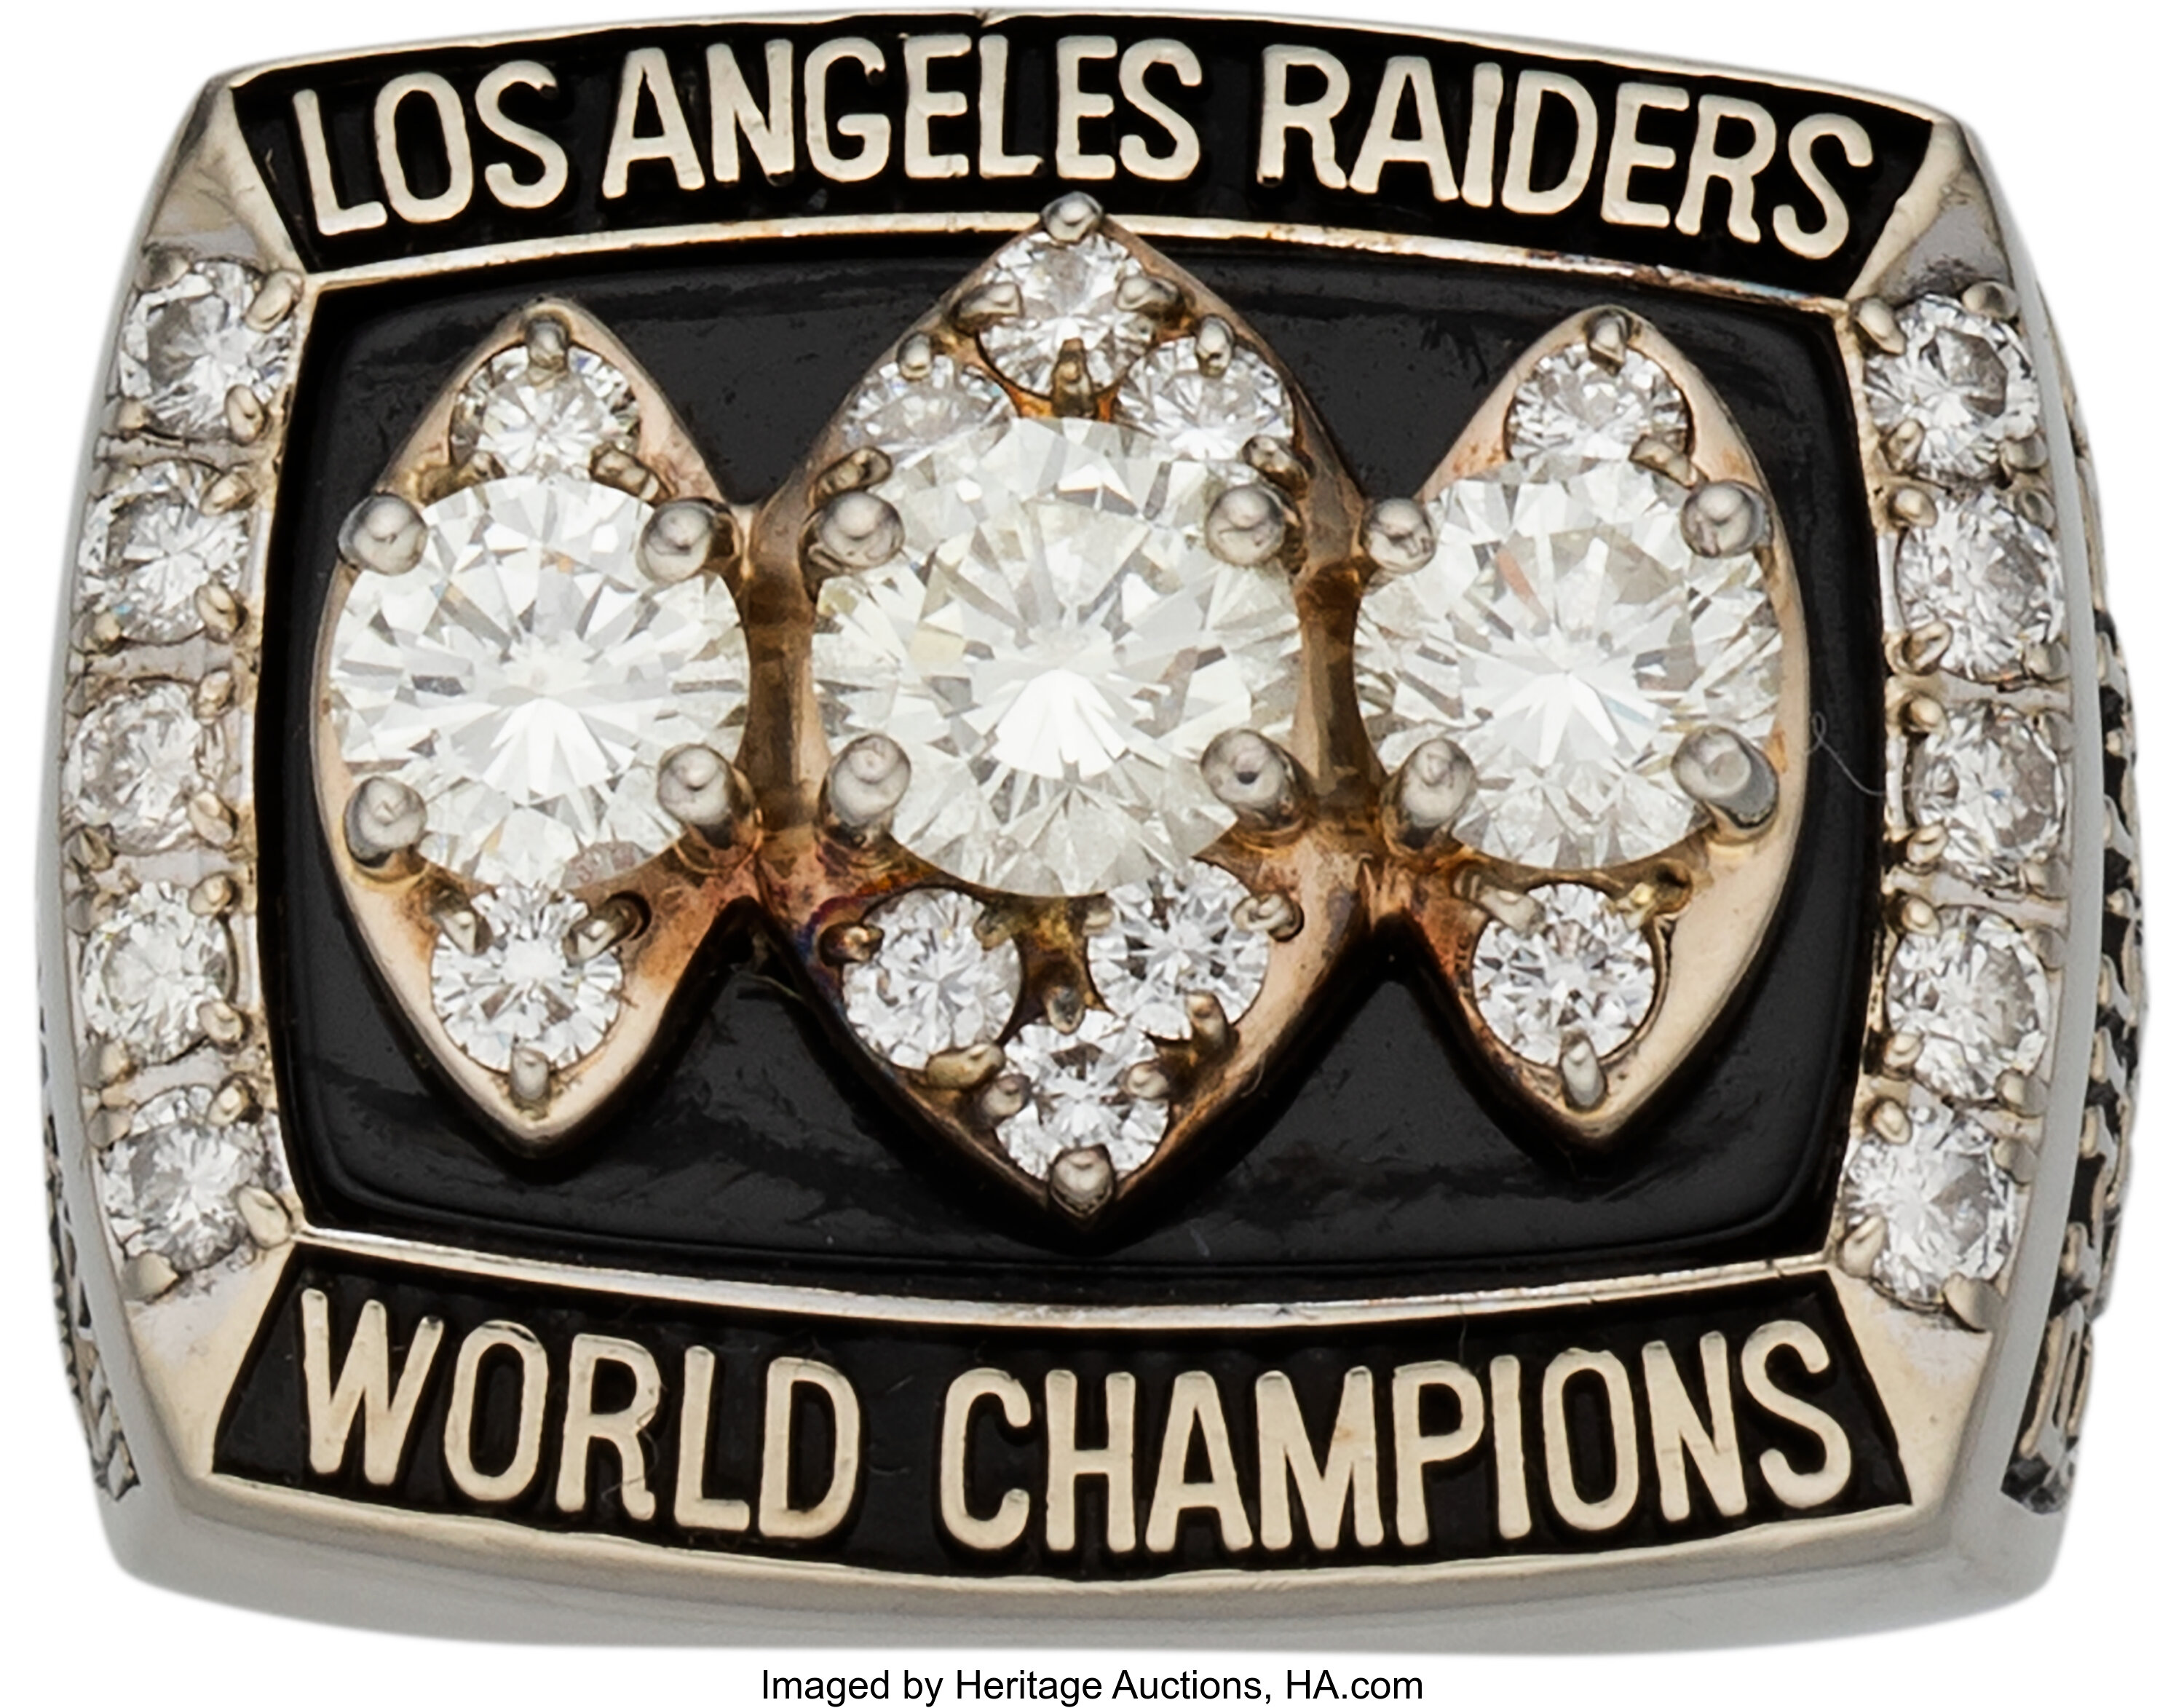 1983 Los Angeles Raiders Super Bowl Xviii Championship Ring Lot 53608 Heritage Auctions 